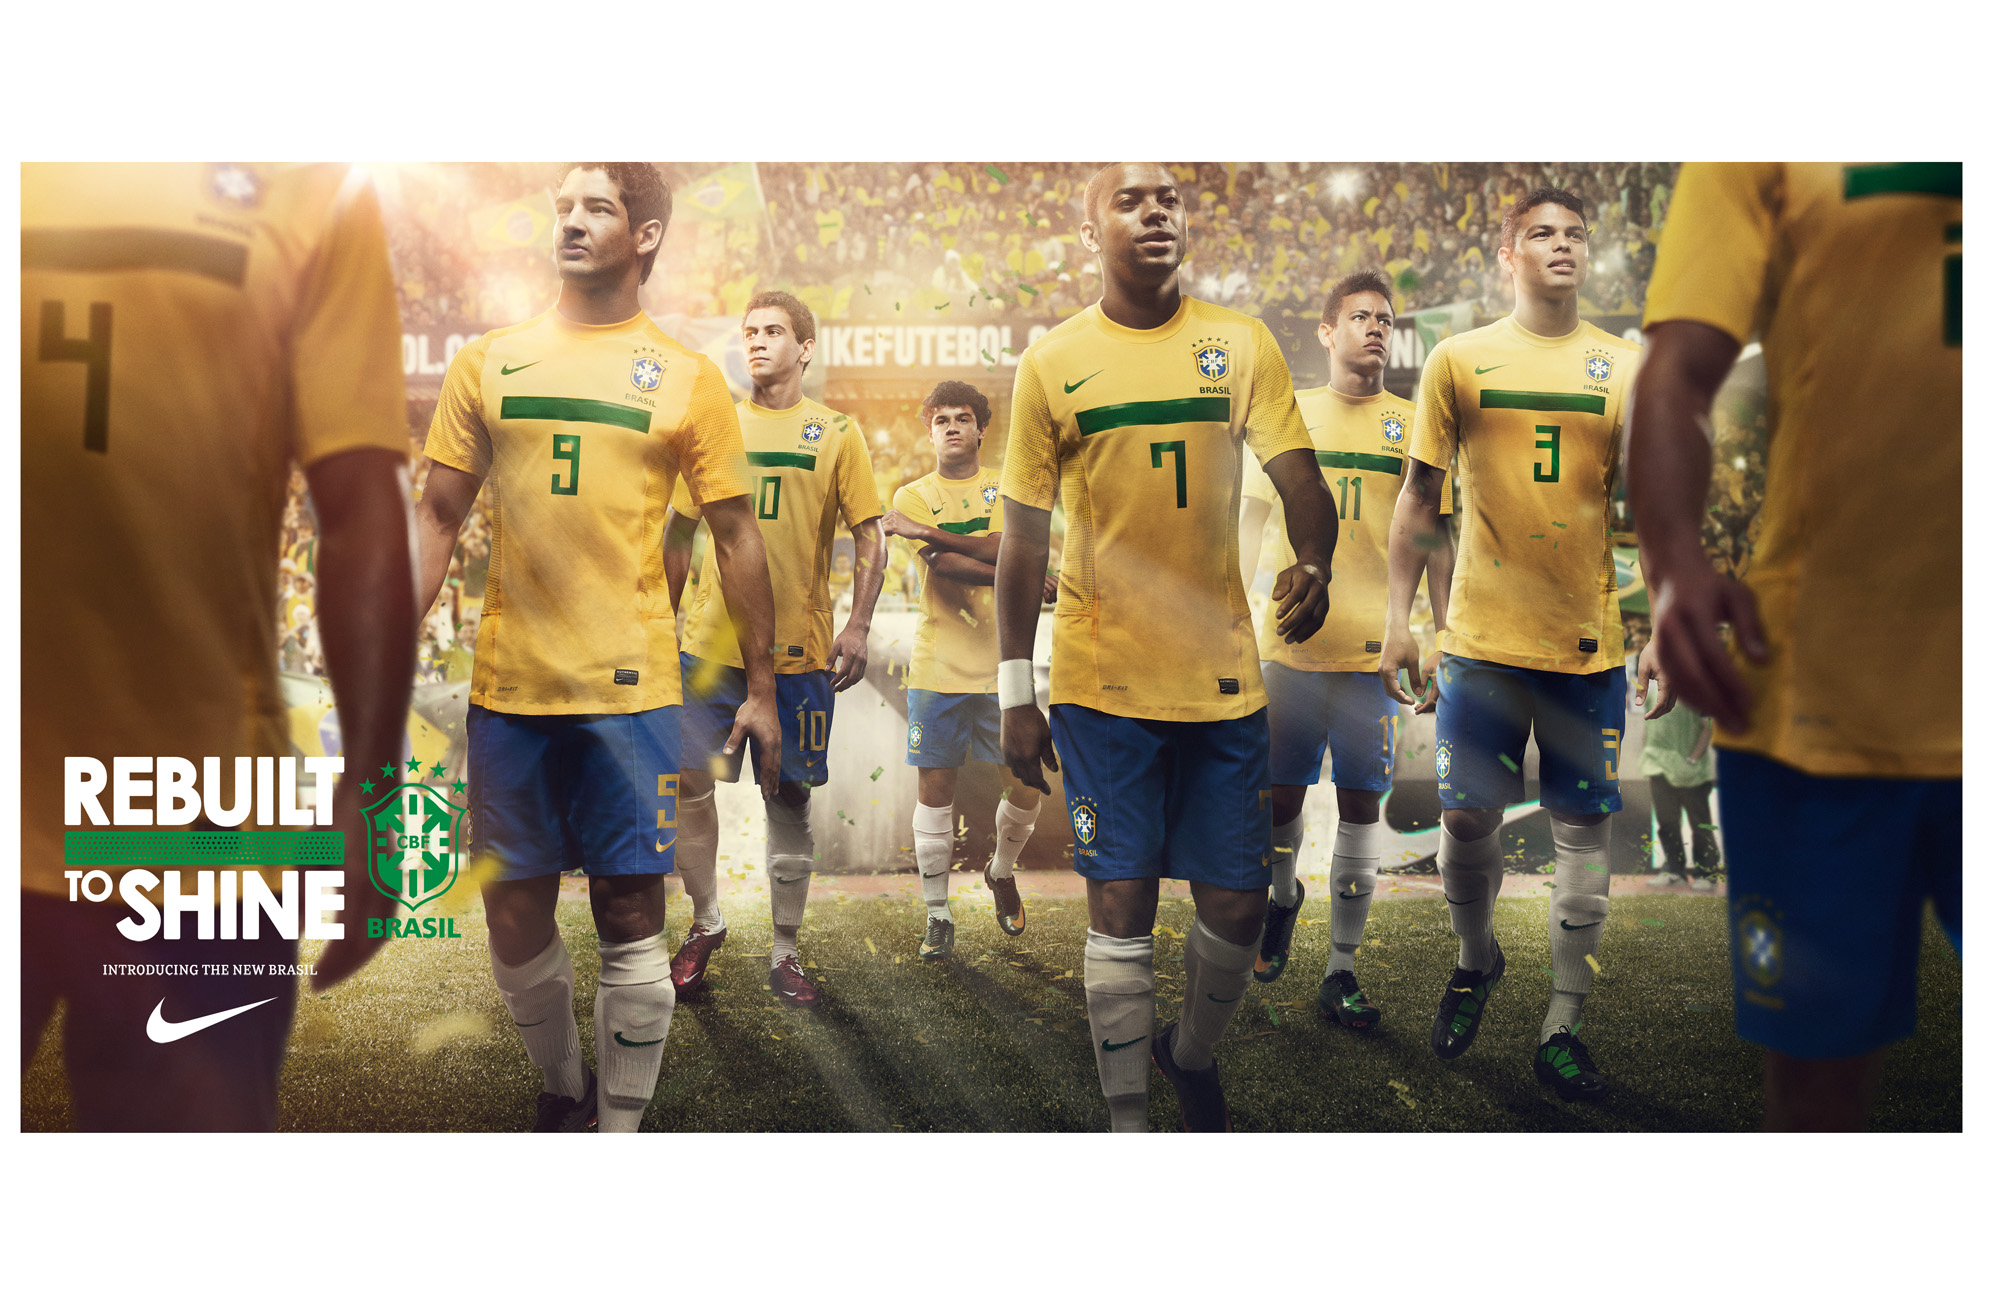 Nike Brazil - 1 of 2